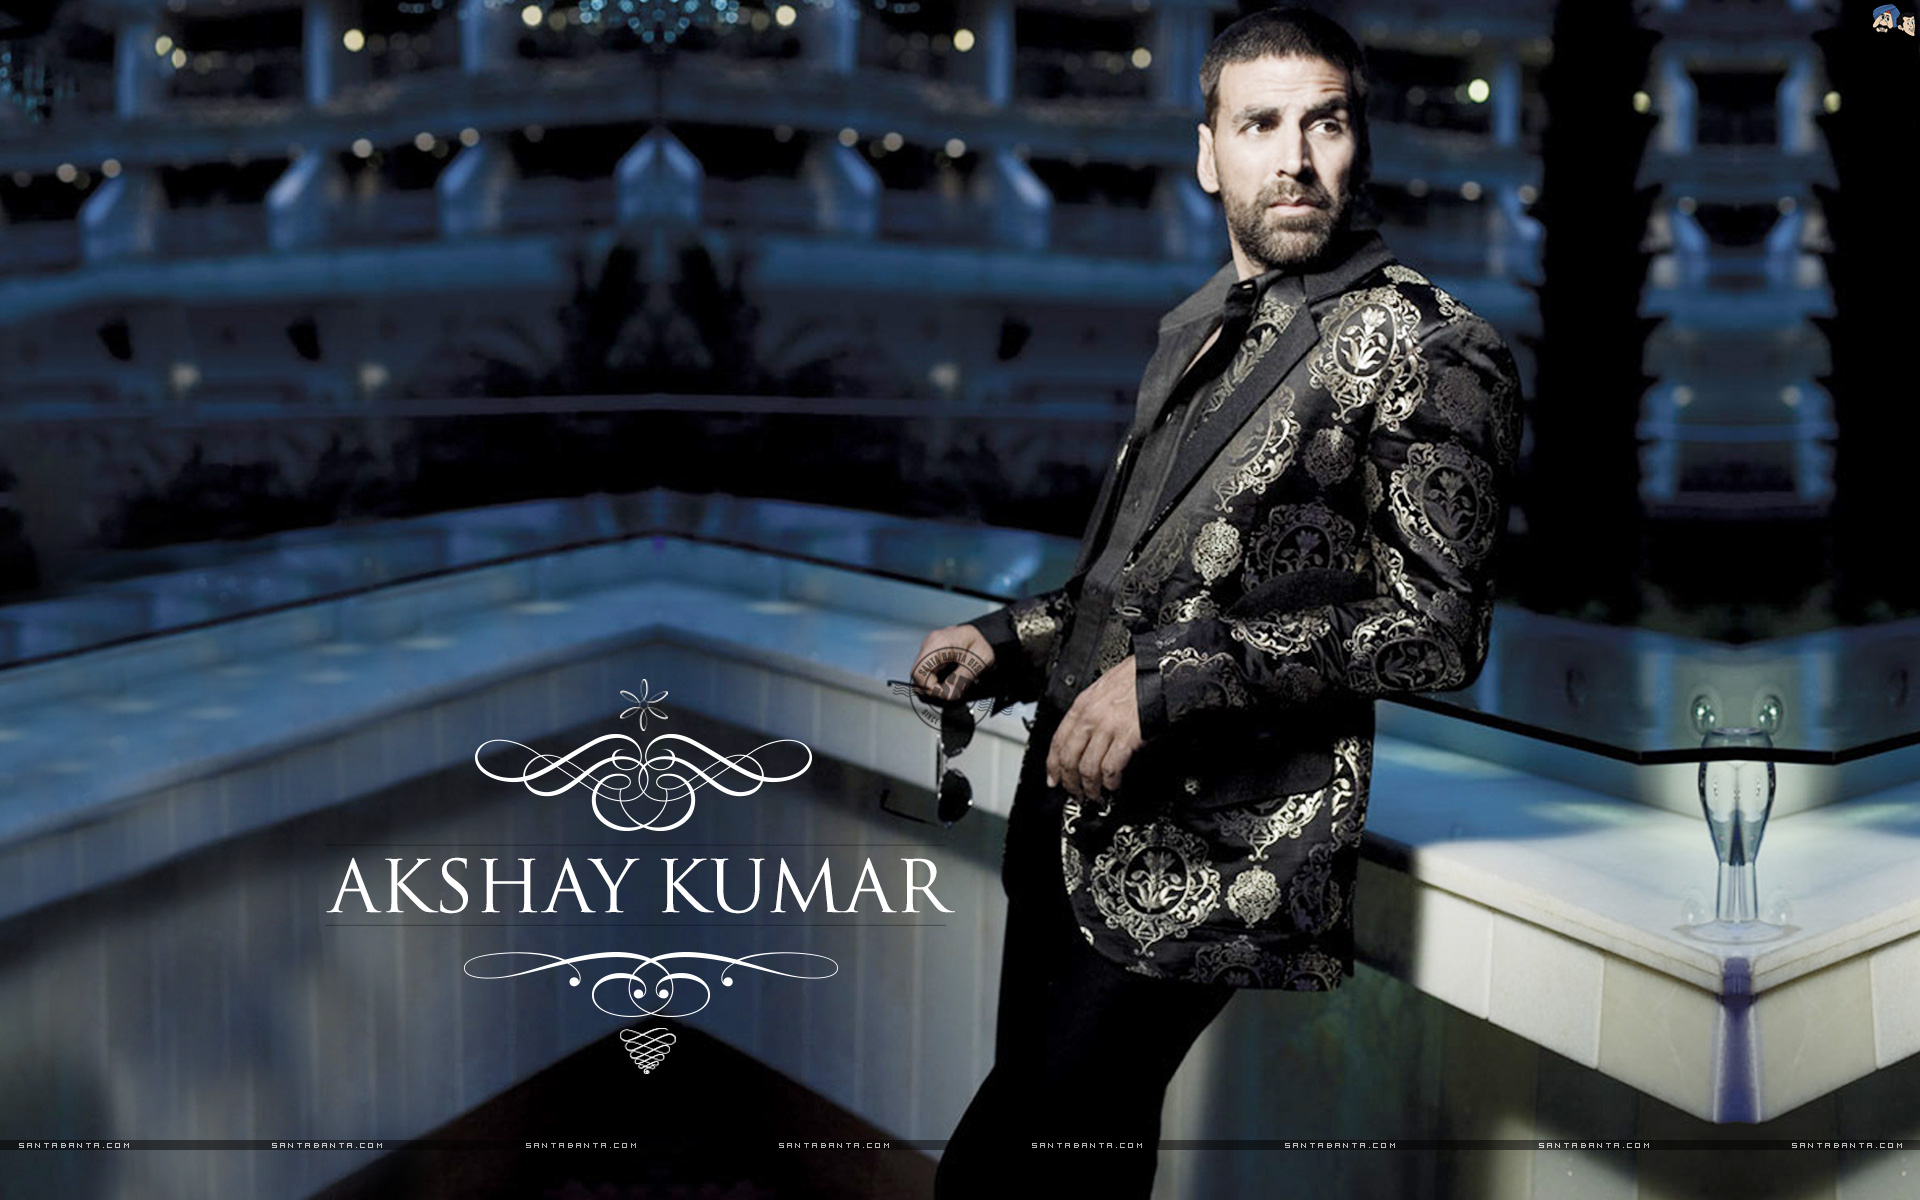 akshay kumar, celebrity, actor